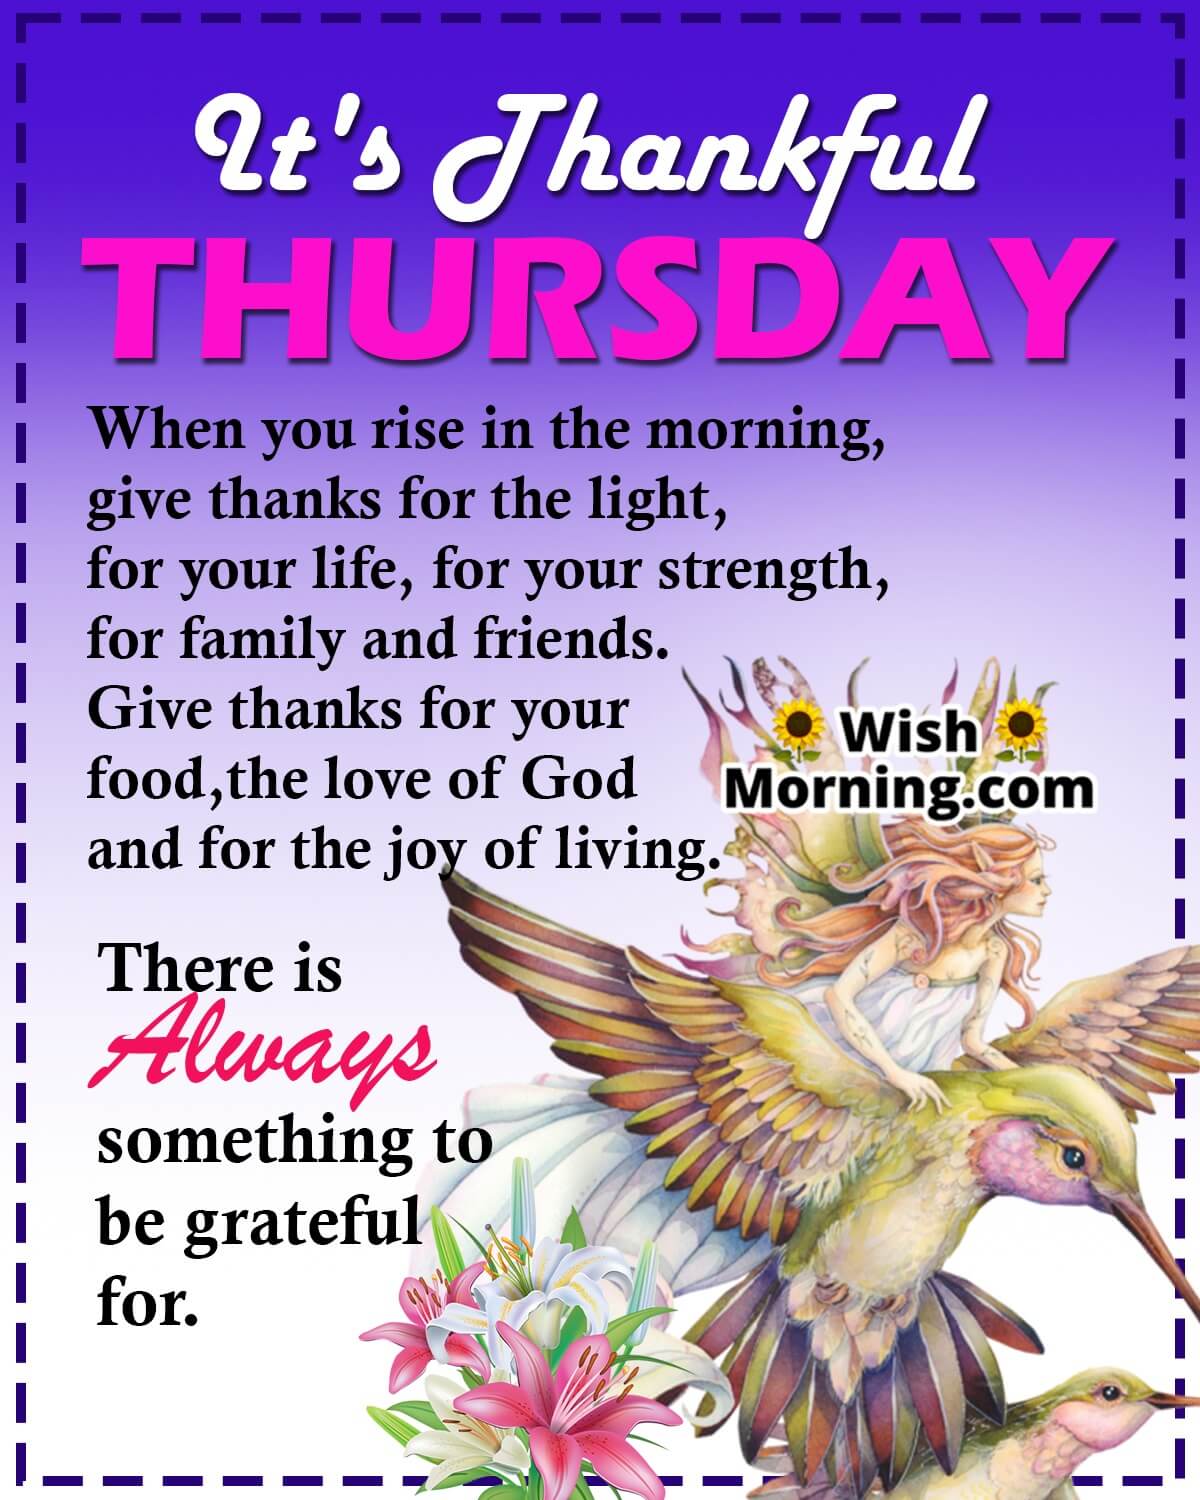 Grateful Thankful Thursday Image